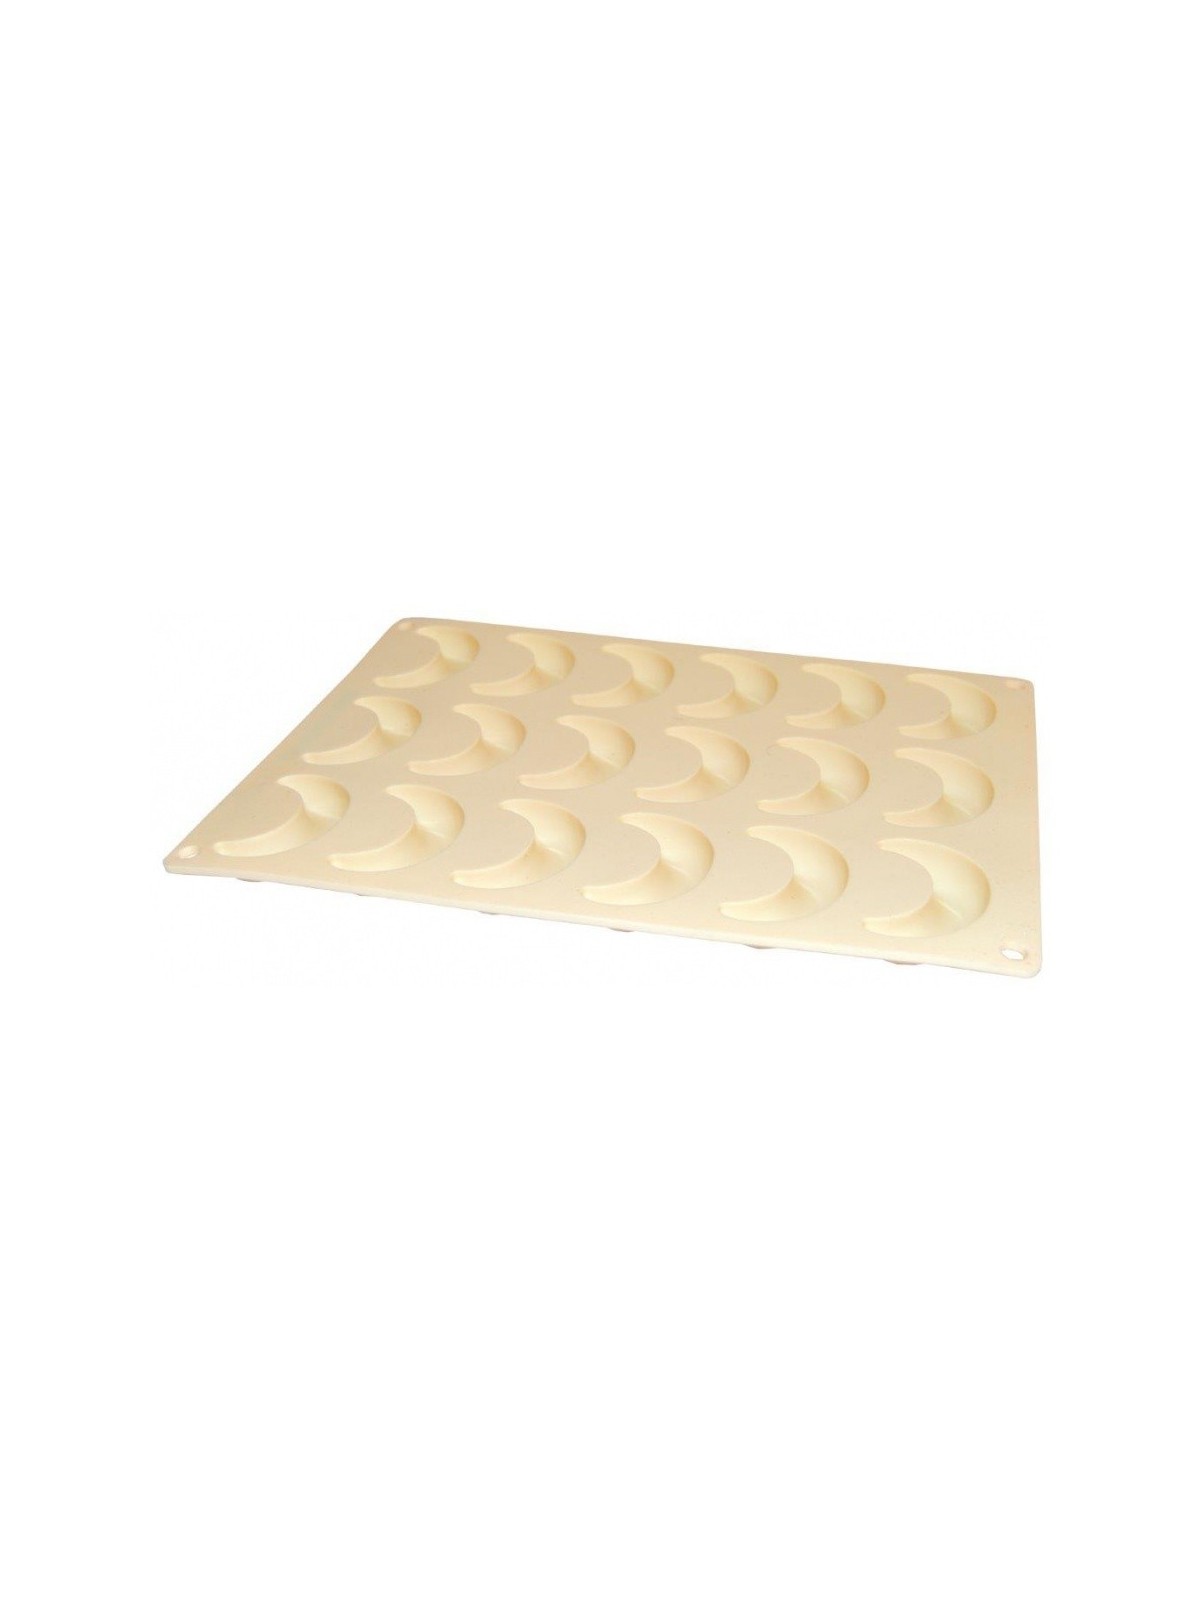 Silicone mold for vanilla rolls - 18